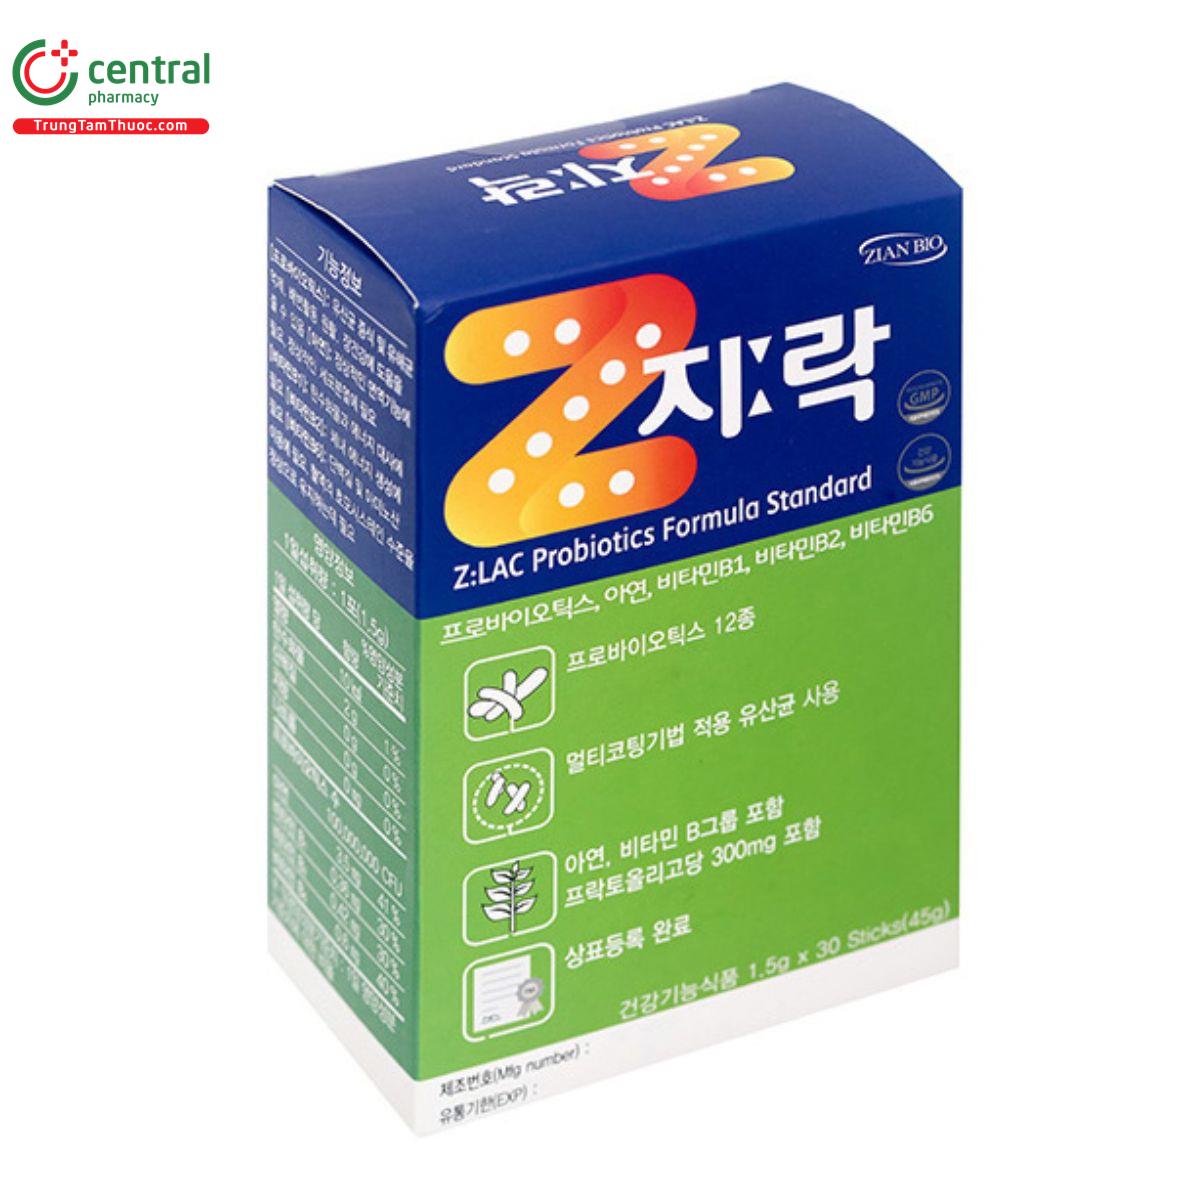 zlac probiotics formula standard 10 P6444